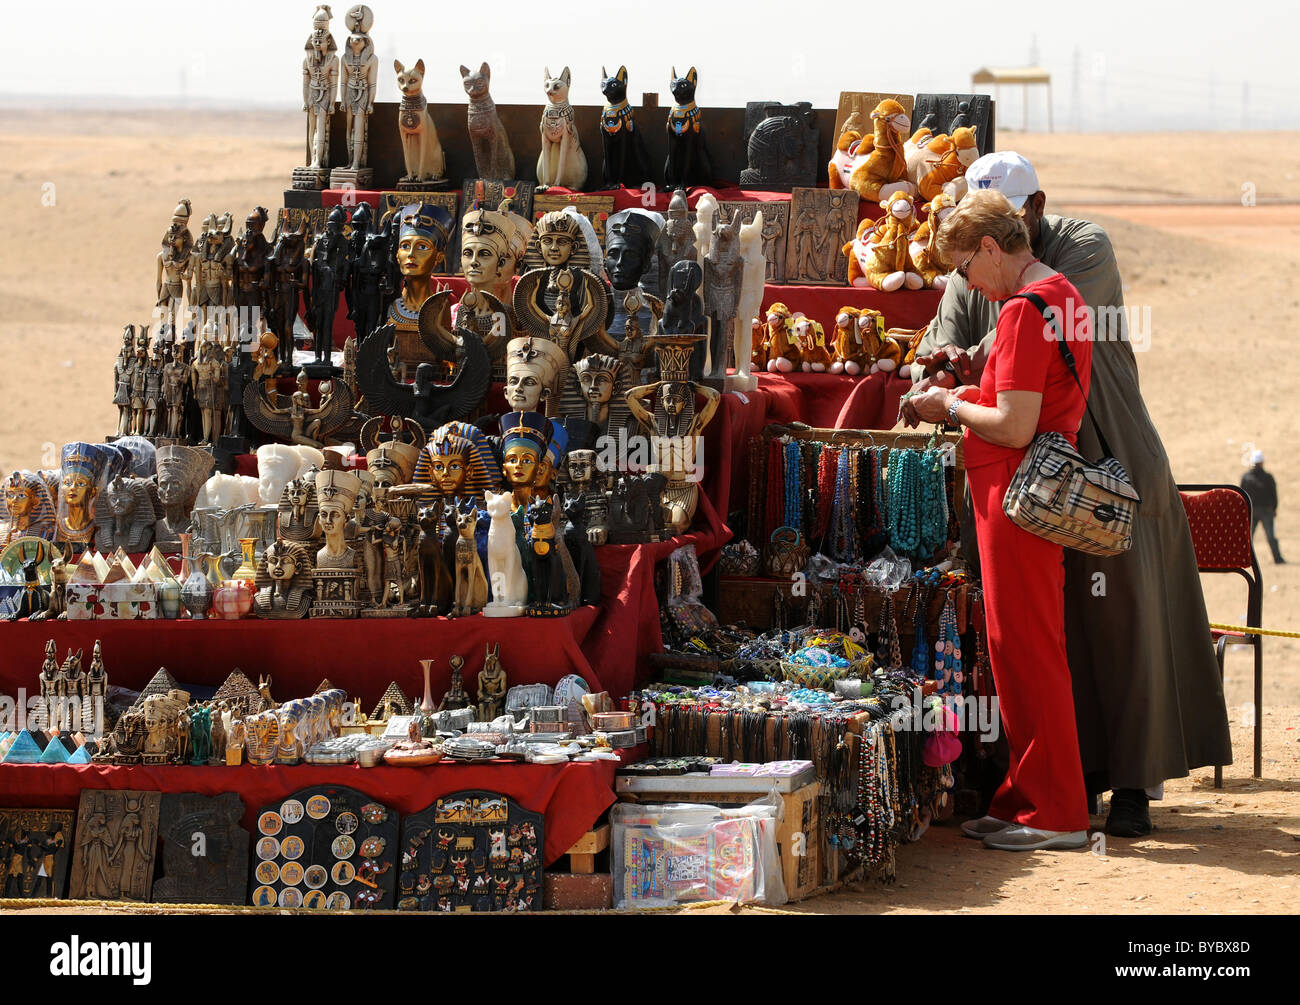 Souvenirs for sale, Egypt Stock Photo